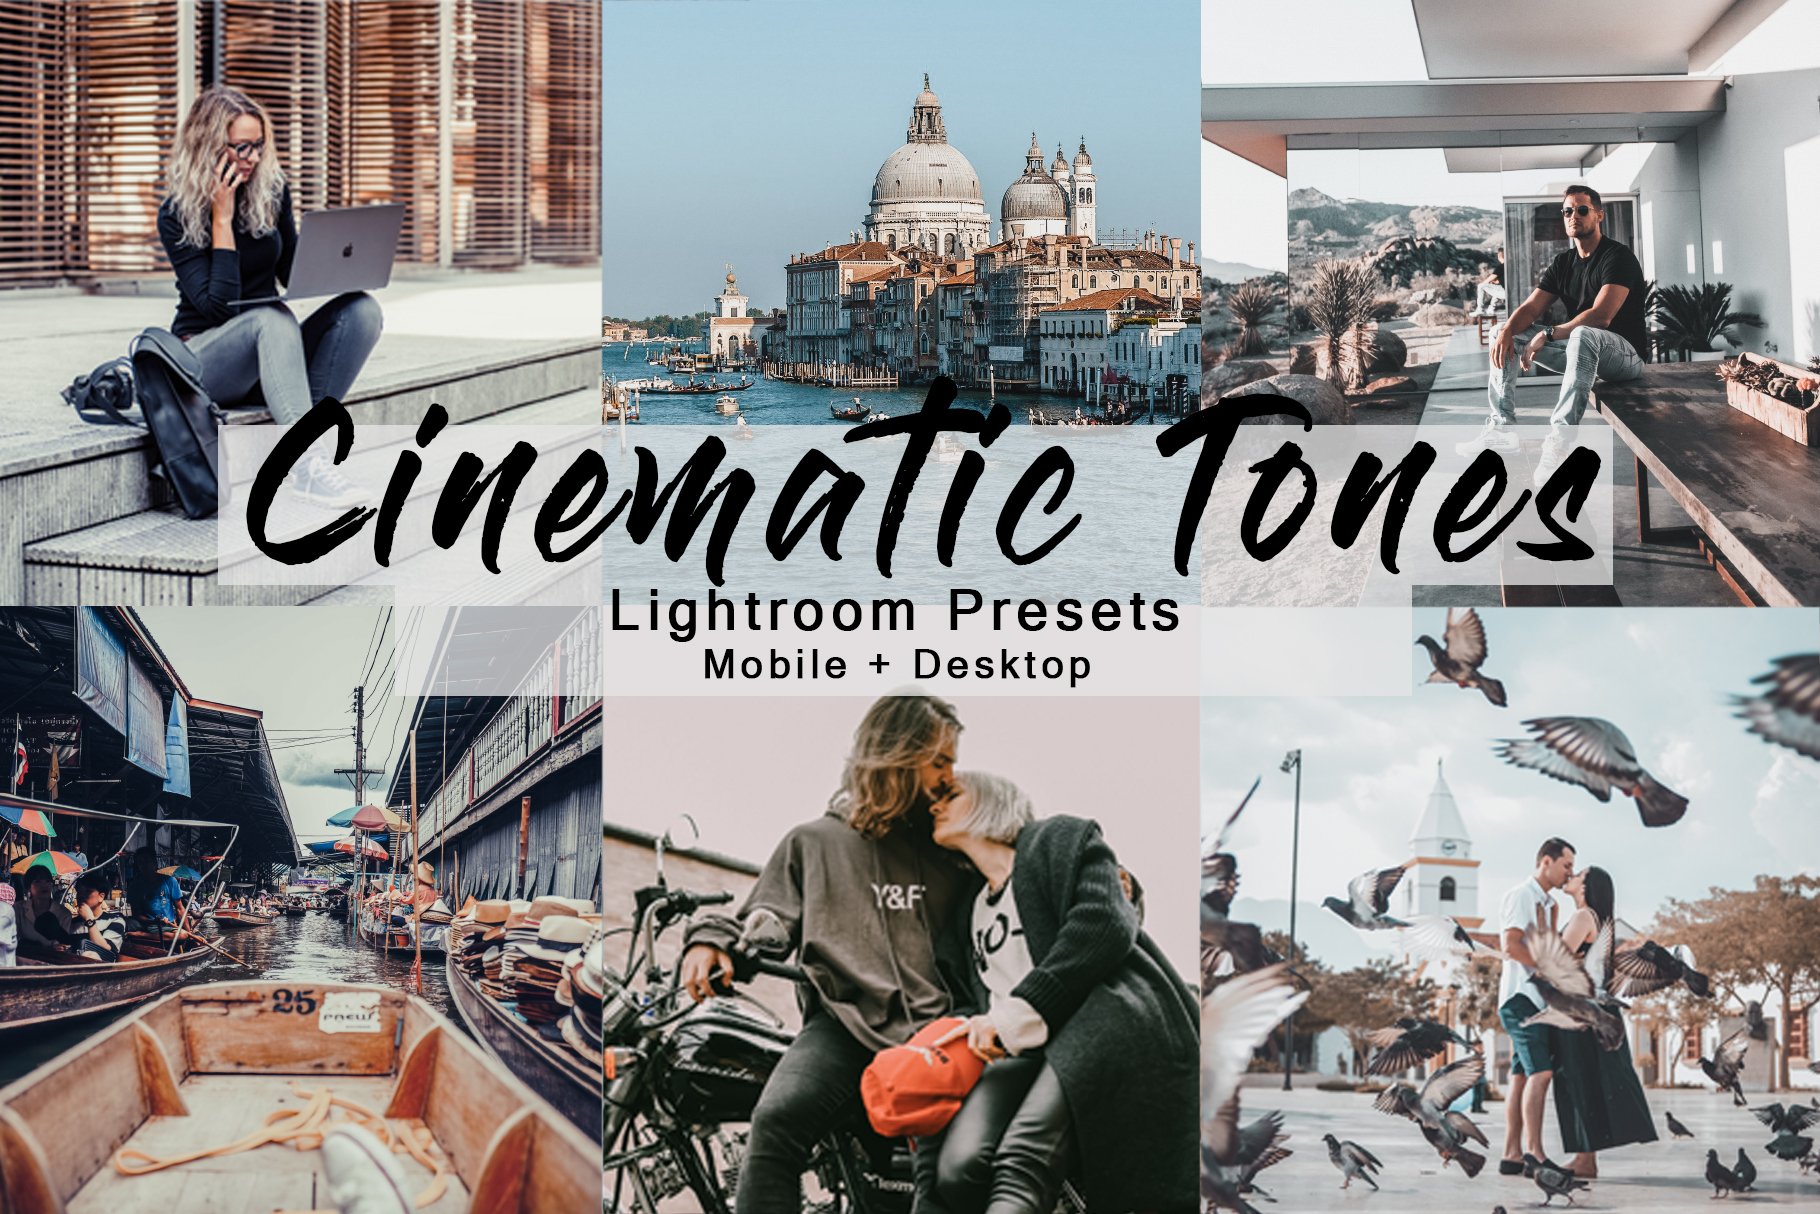 Cinematic Tones | Lightroom Presetscover image.